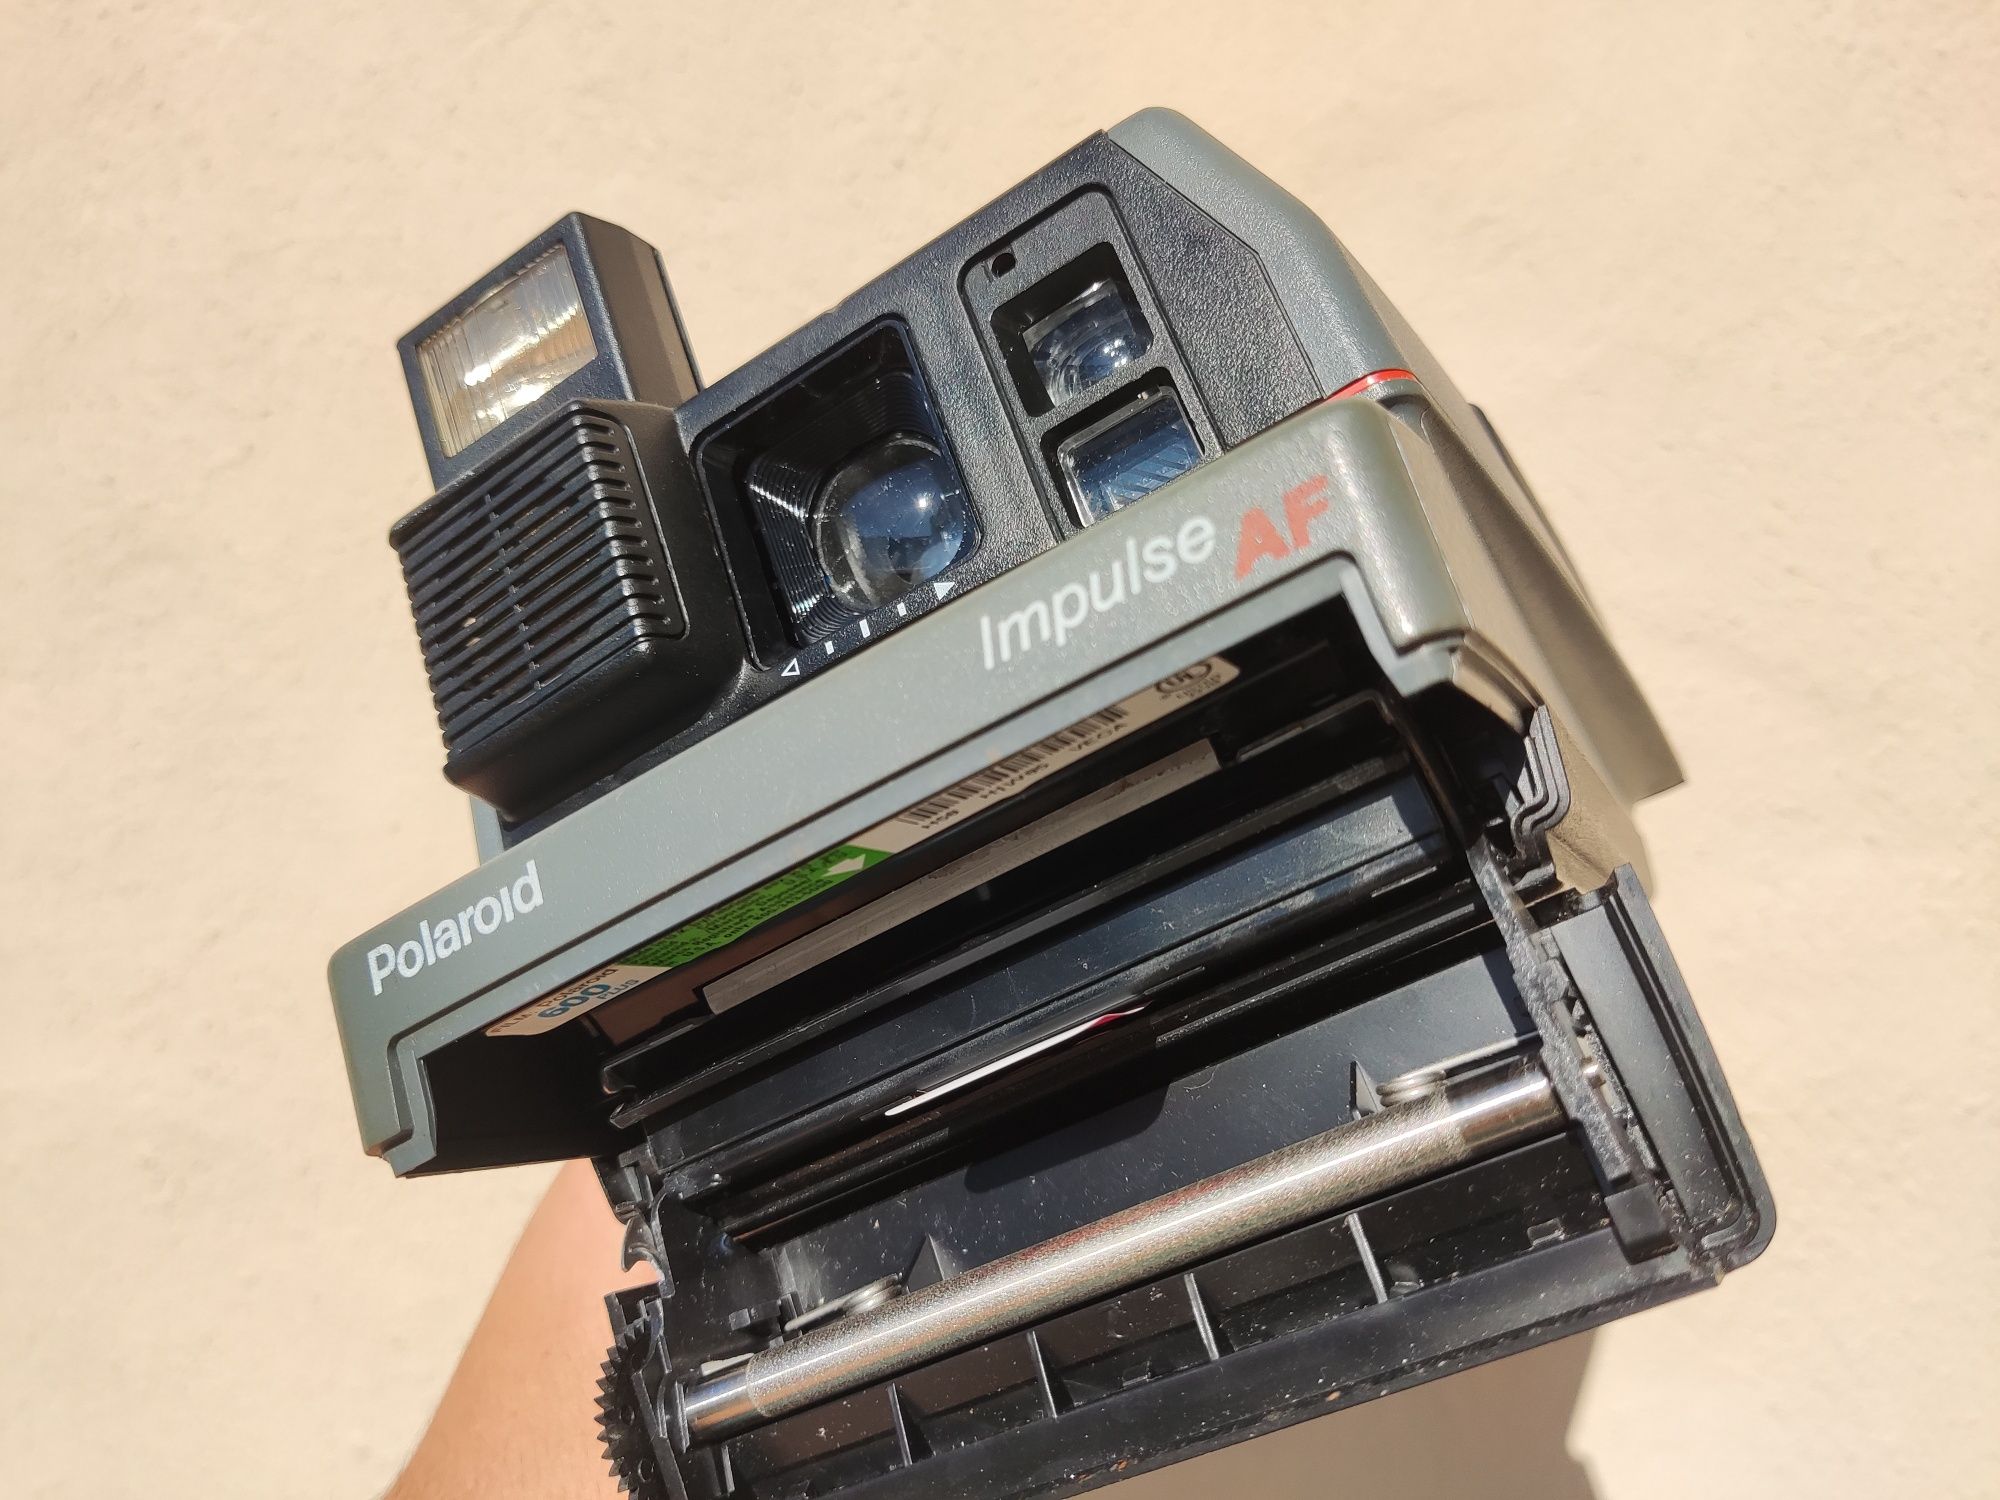 Polaroid Impulse AutoFocus System (1994) - vintage